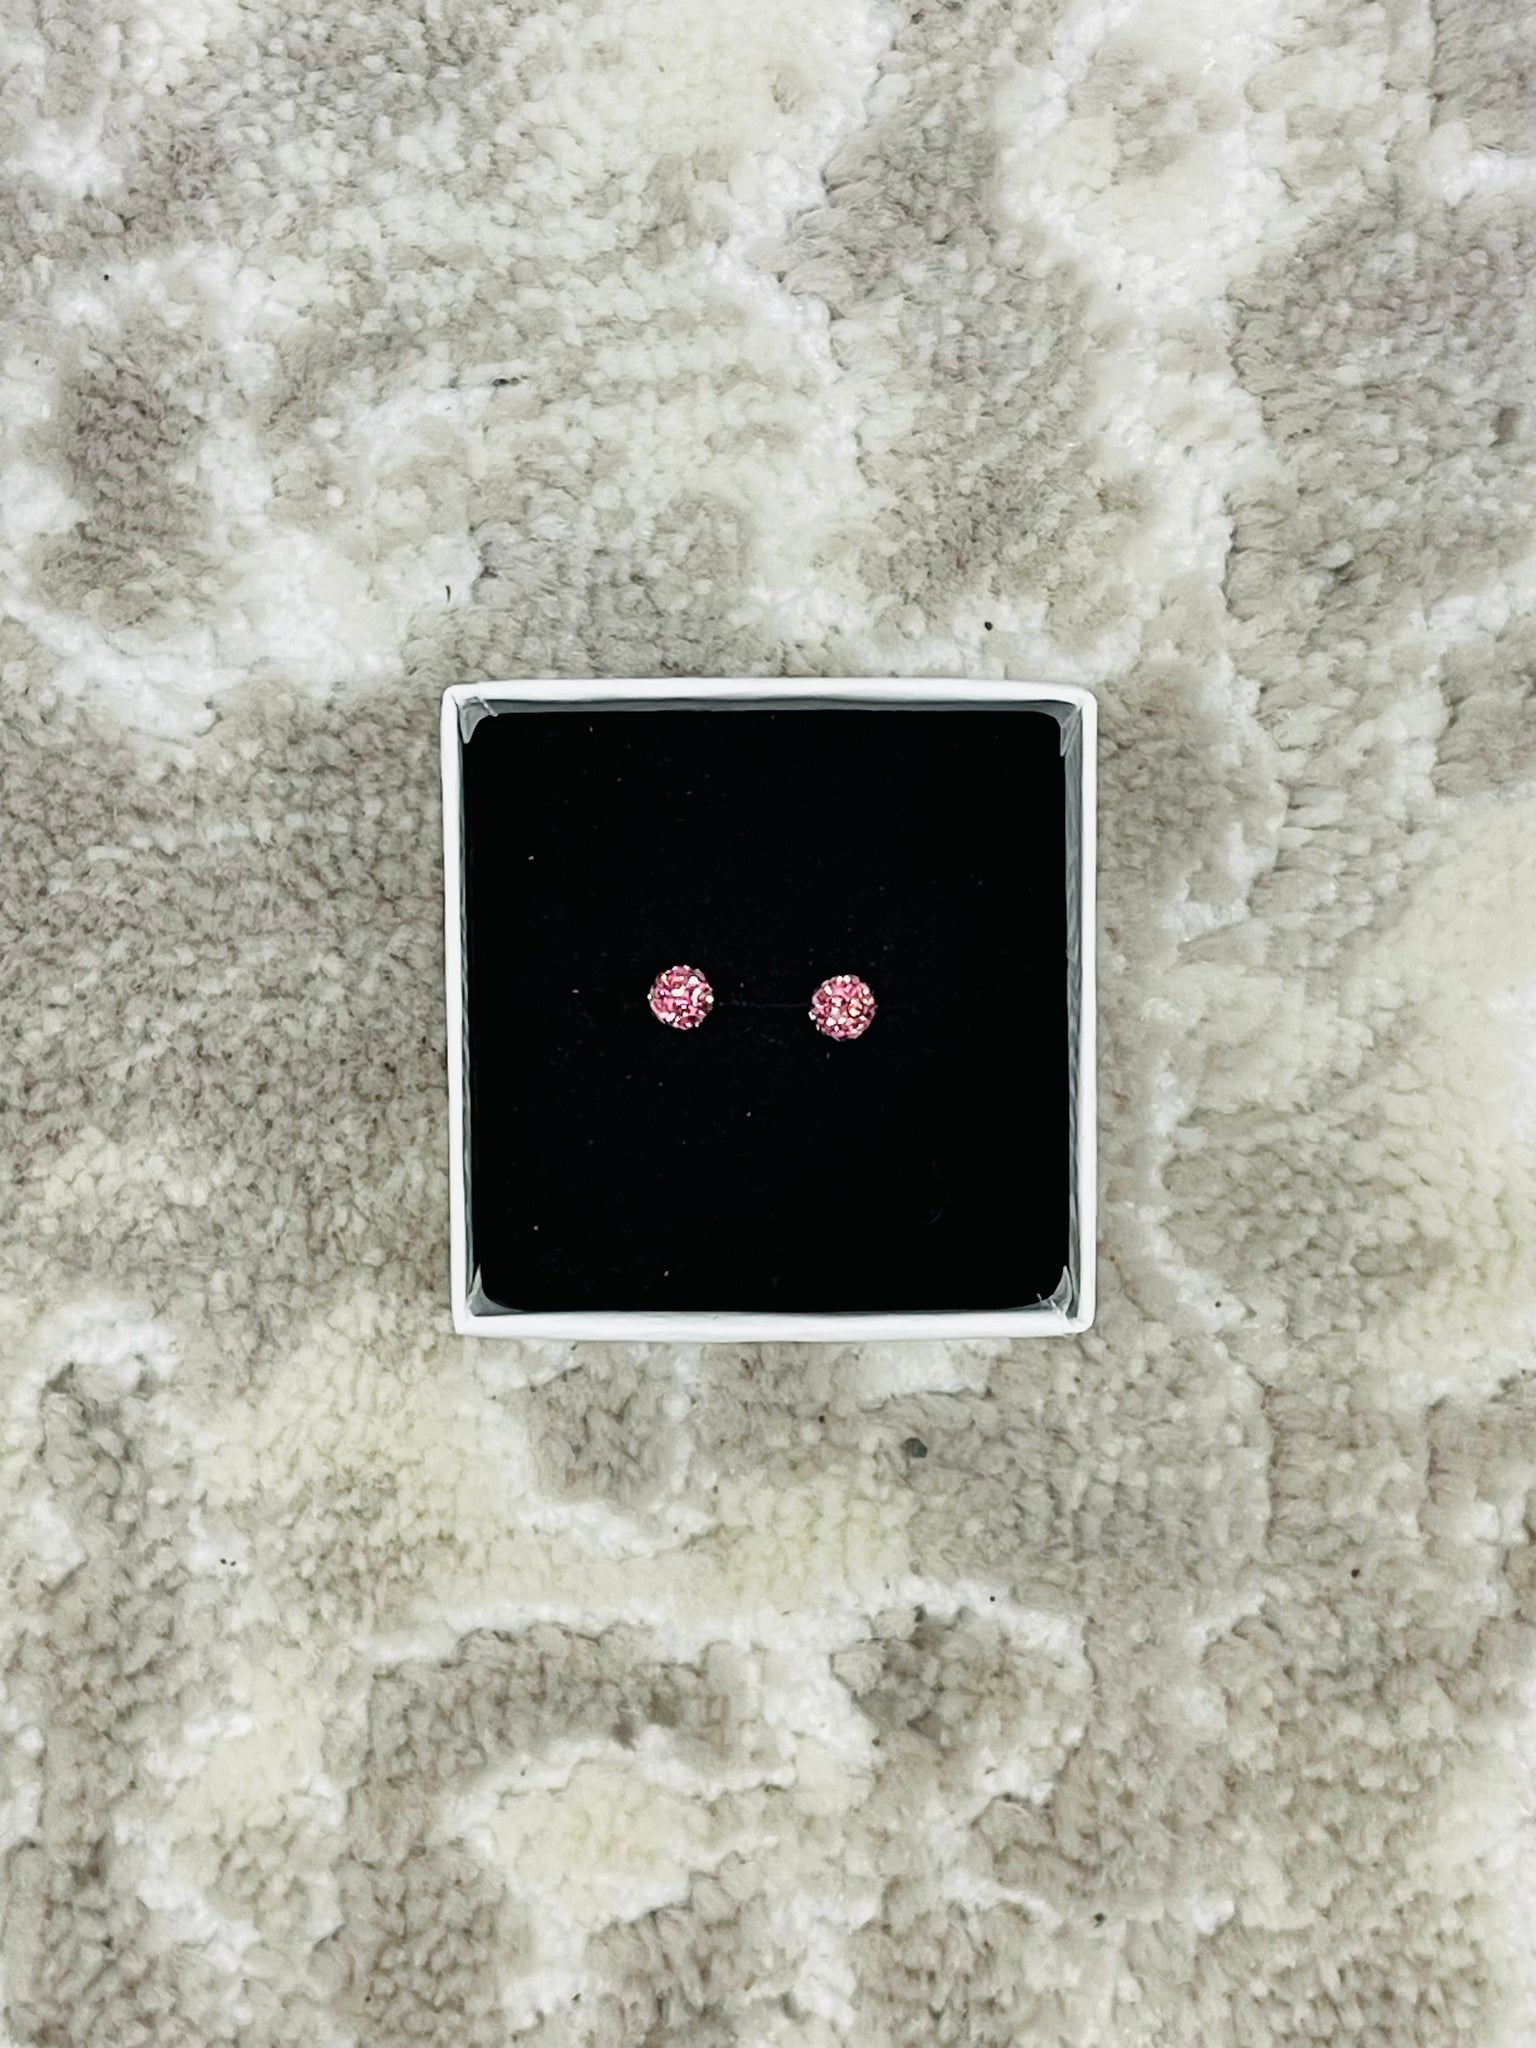 Crystal Ball Earrings - Light Pink 4mm